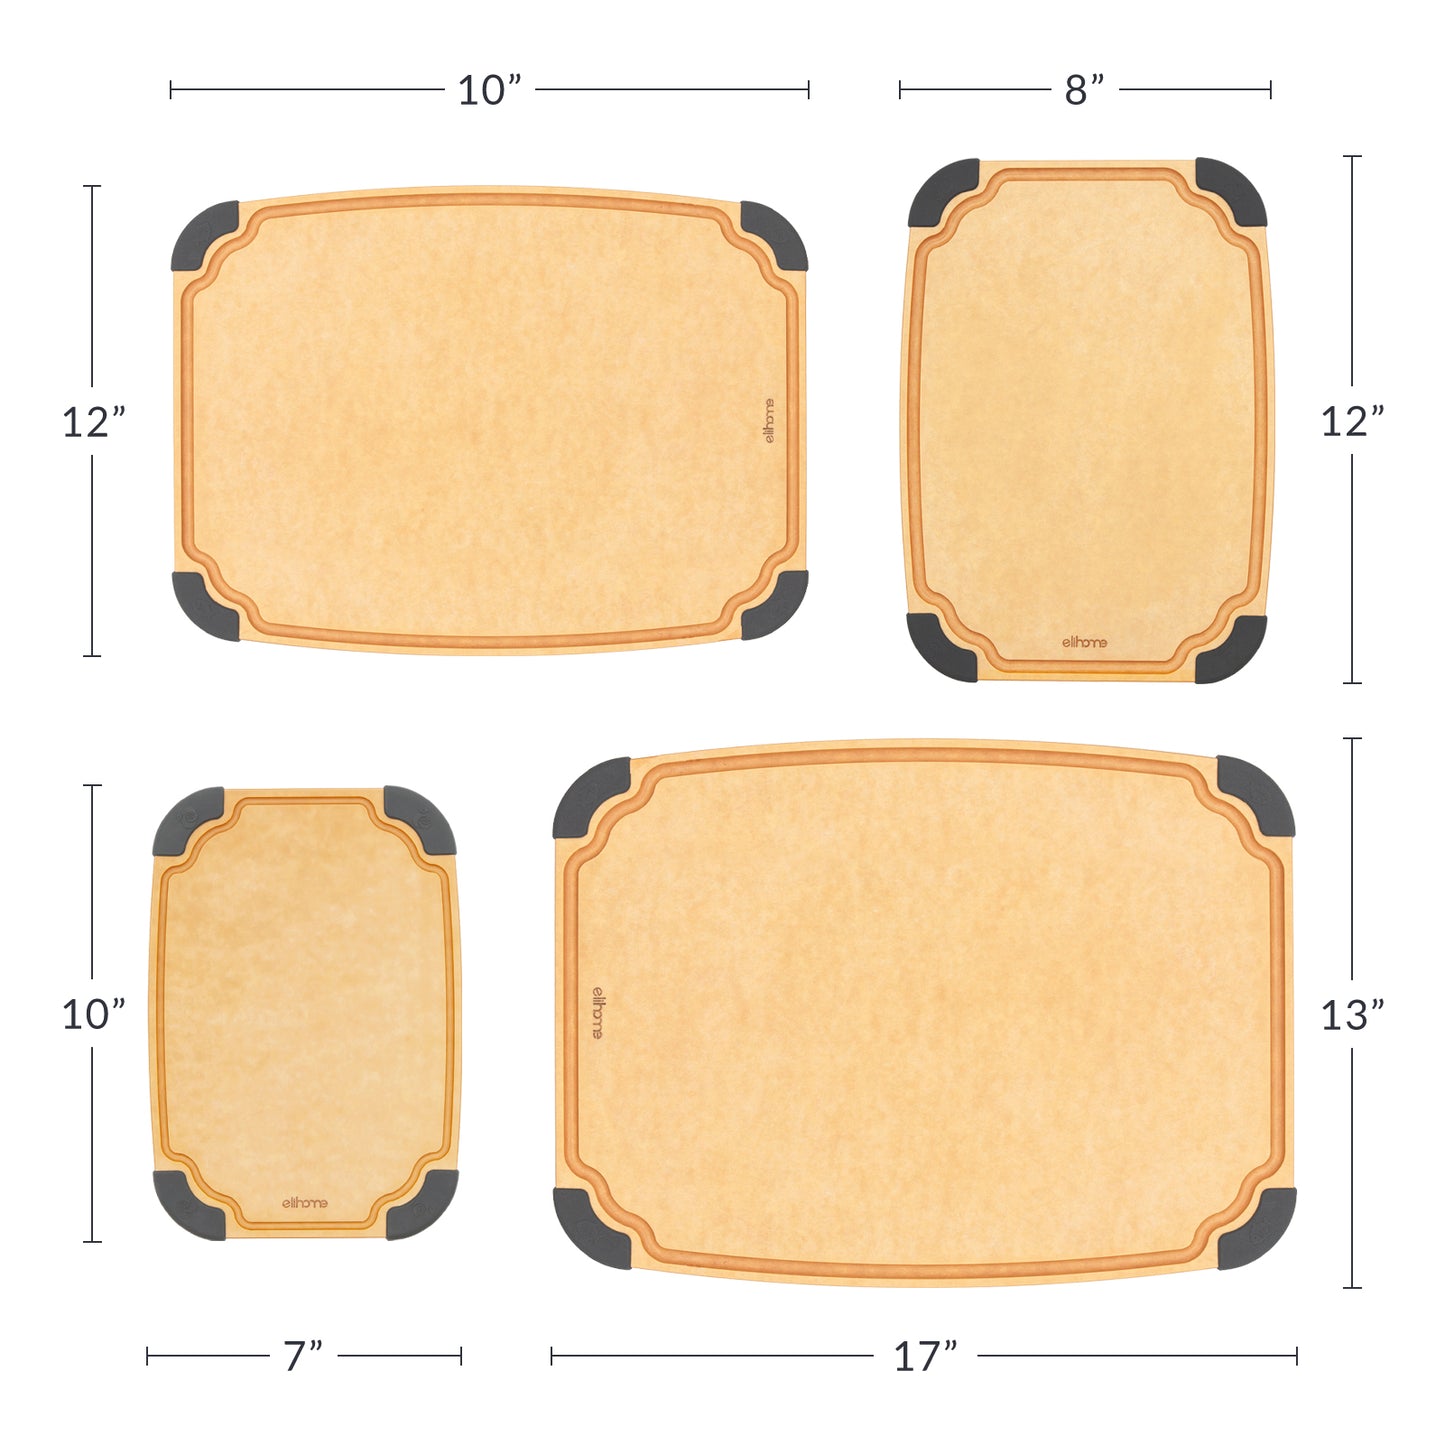 Essential Series Cutting Board, 10"x 7" SMALL